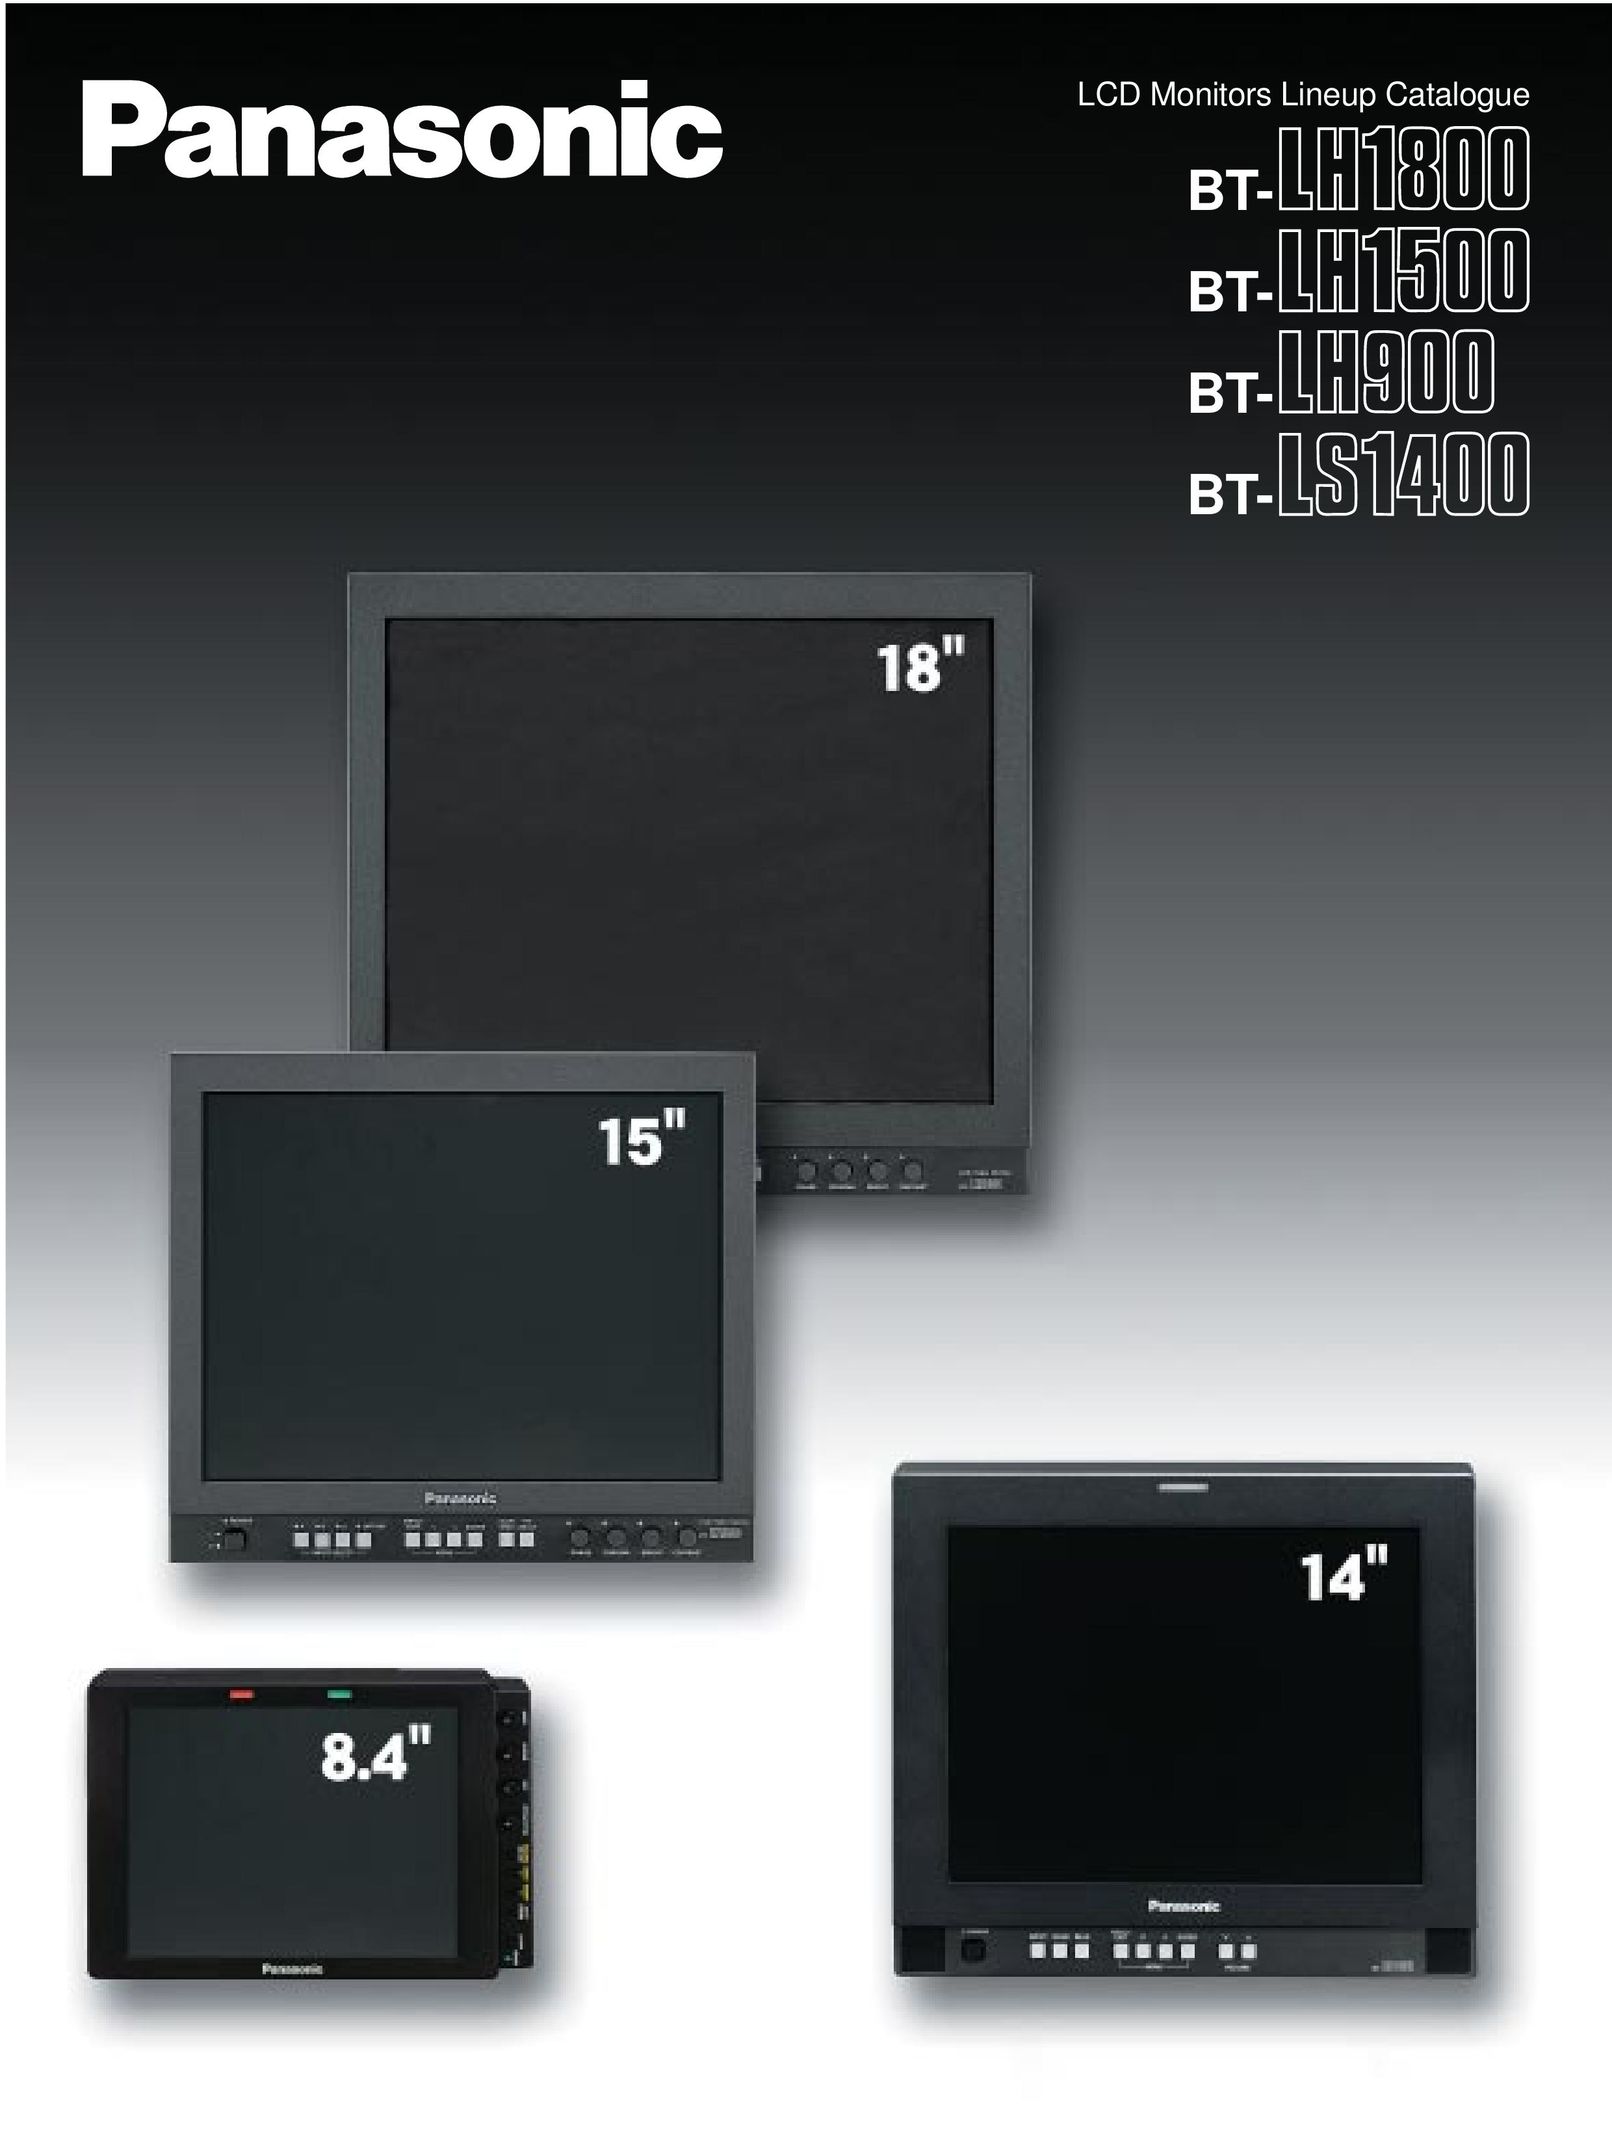 Panasonic BT-LS1400 Computer Monitor User Manual